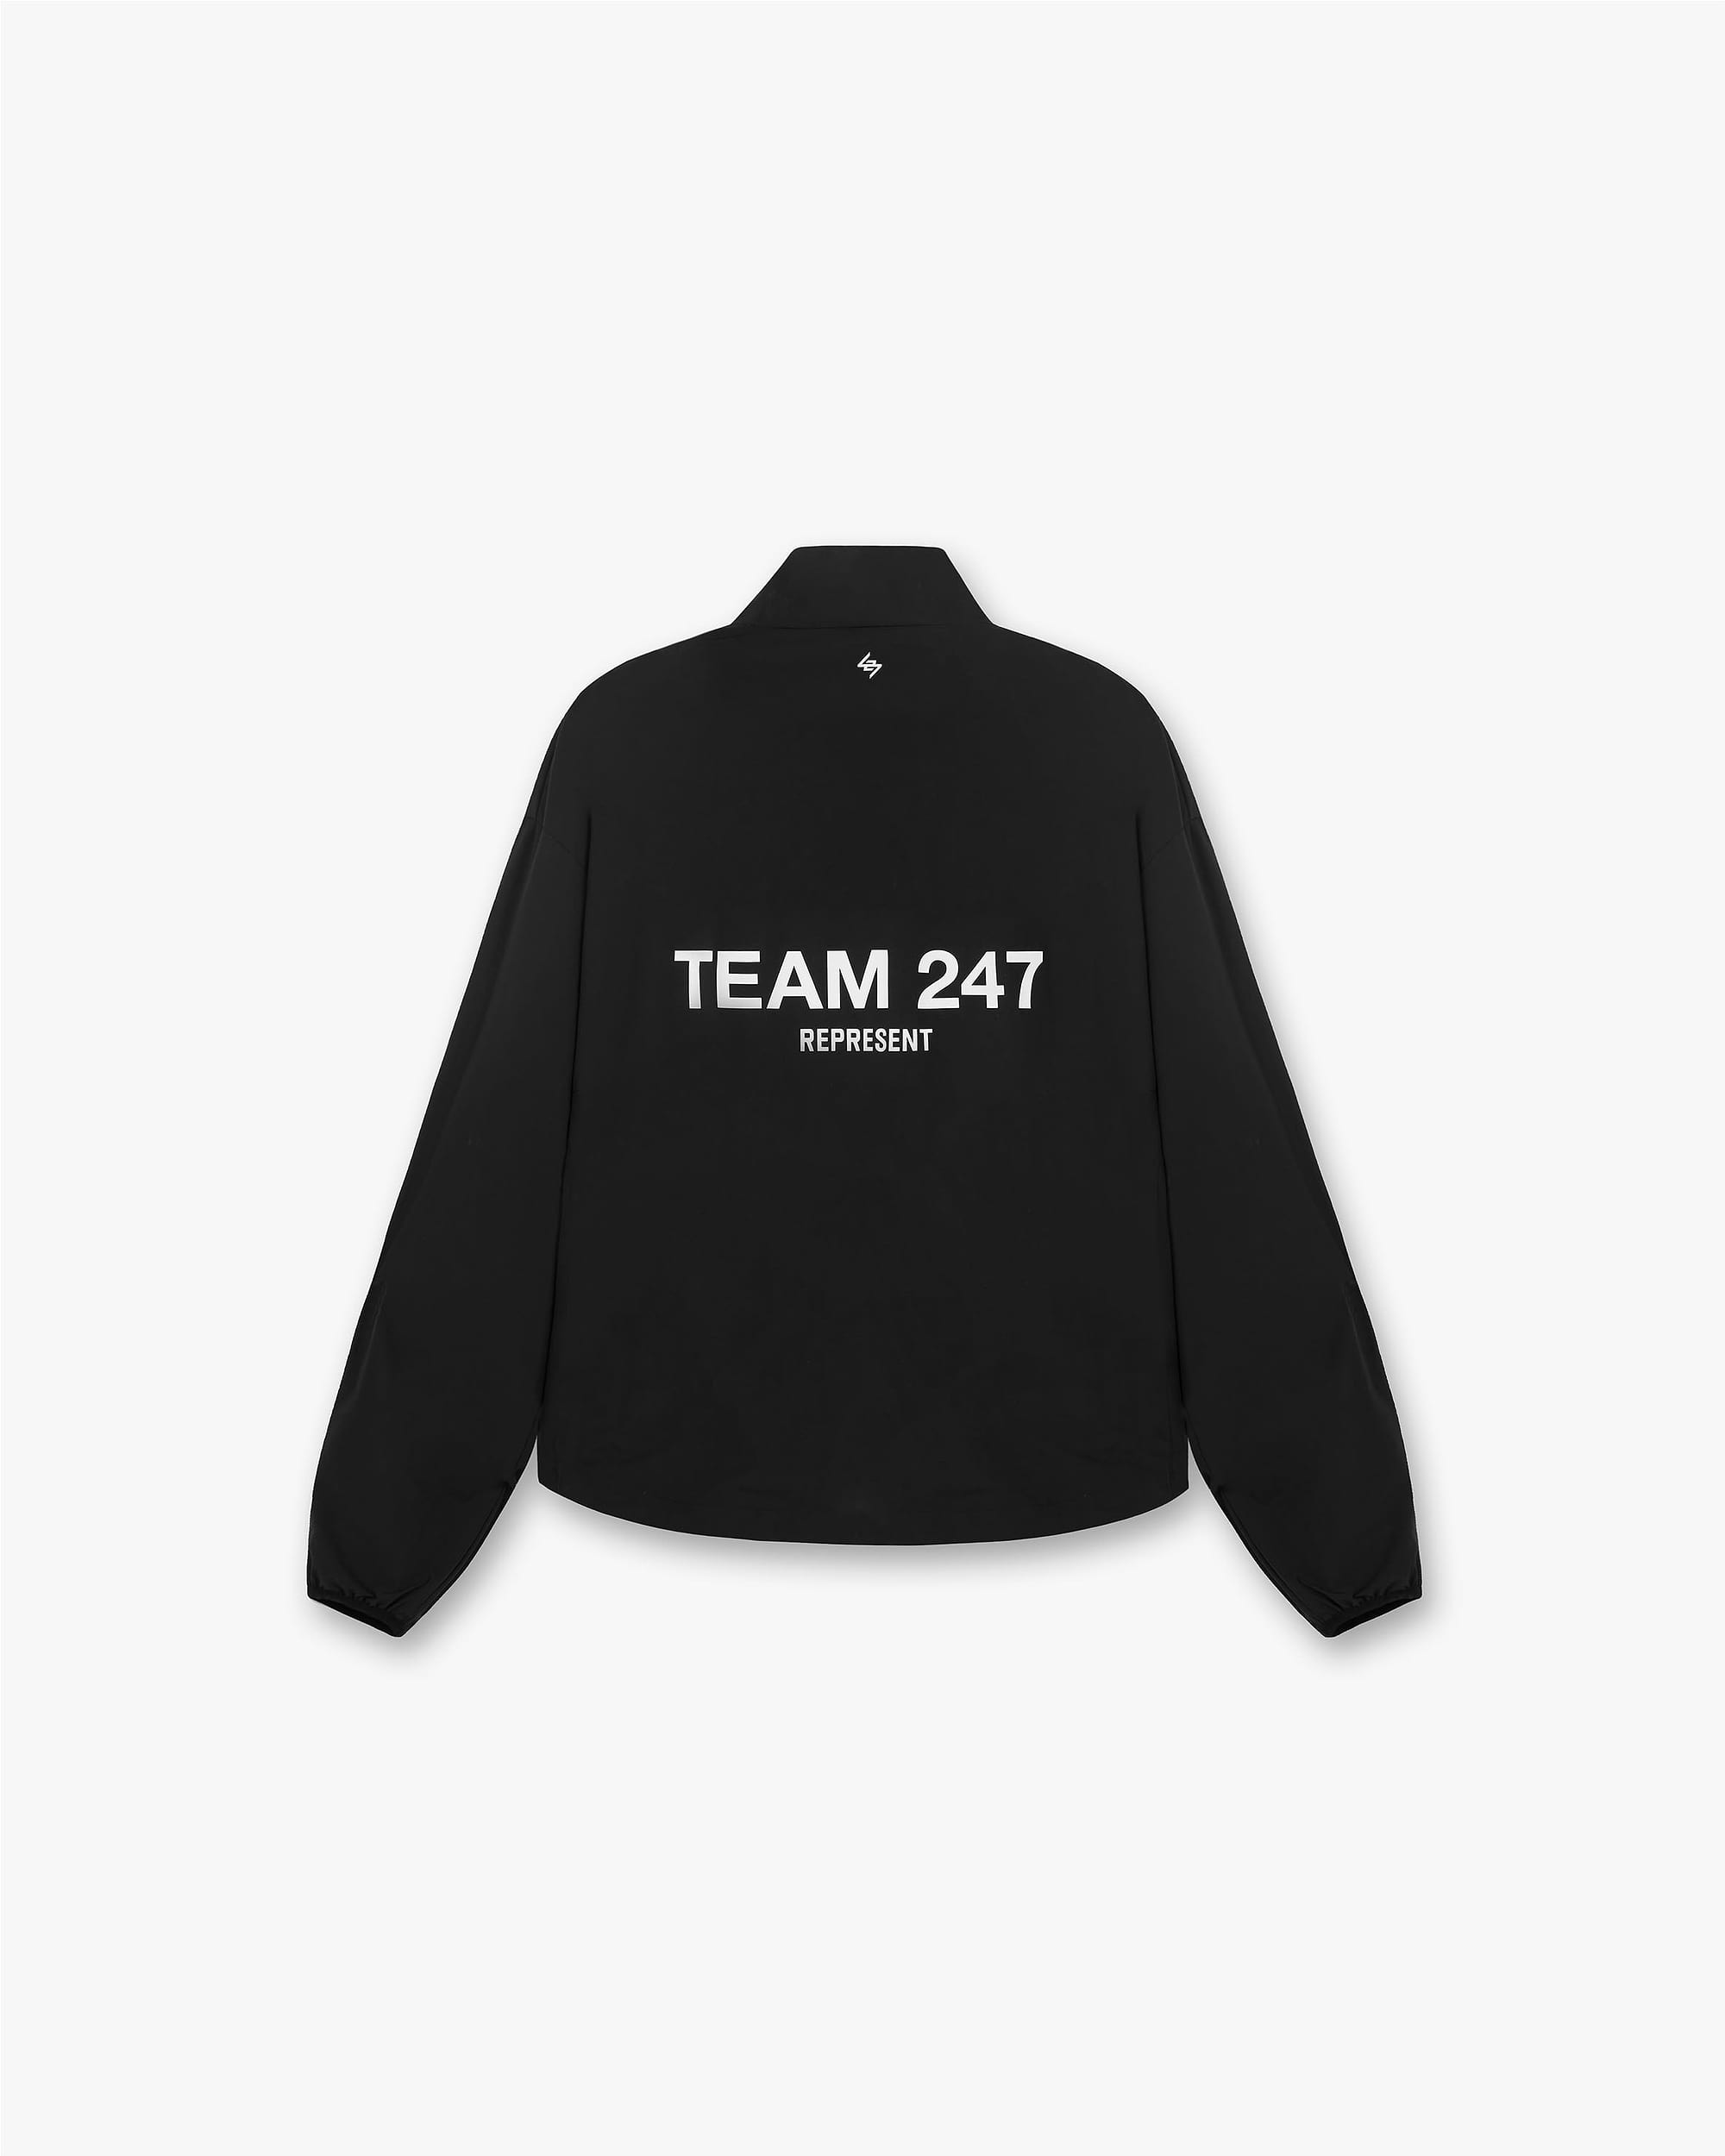 Team 247 Track Jacket | Black Outerwear 247 | Represent Clo